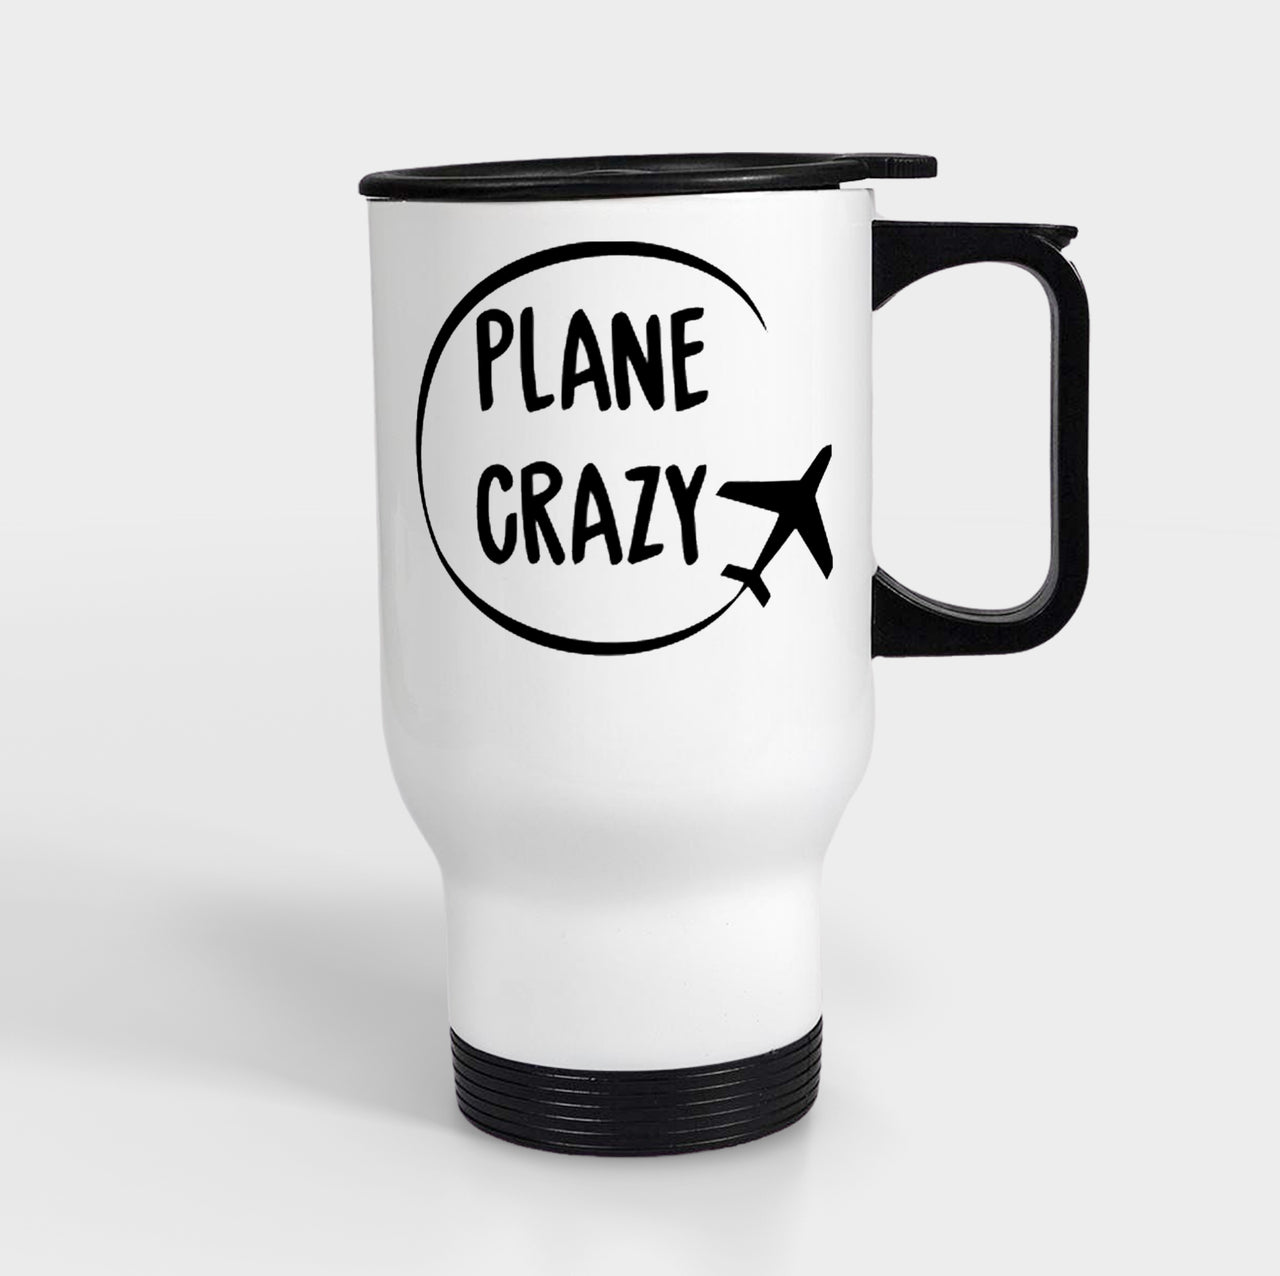 Plane Crazy Designed Travel Mugs (With Holder)